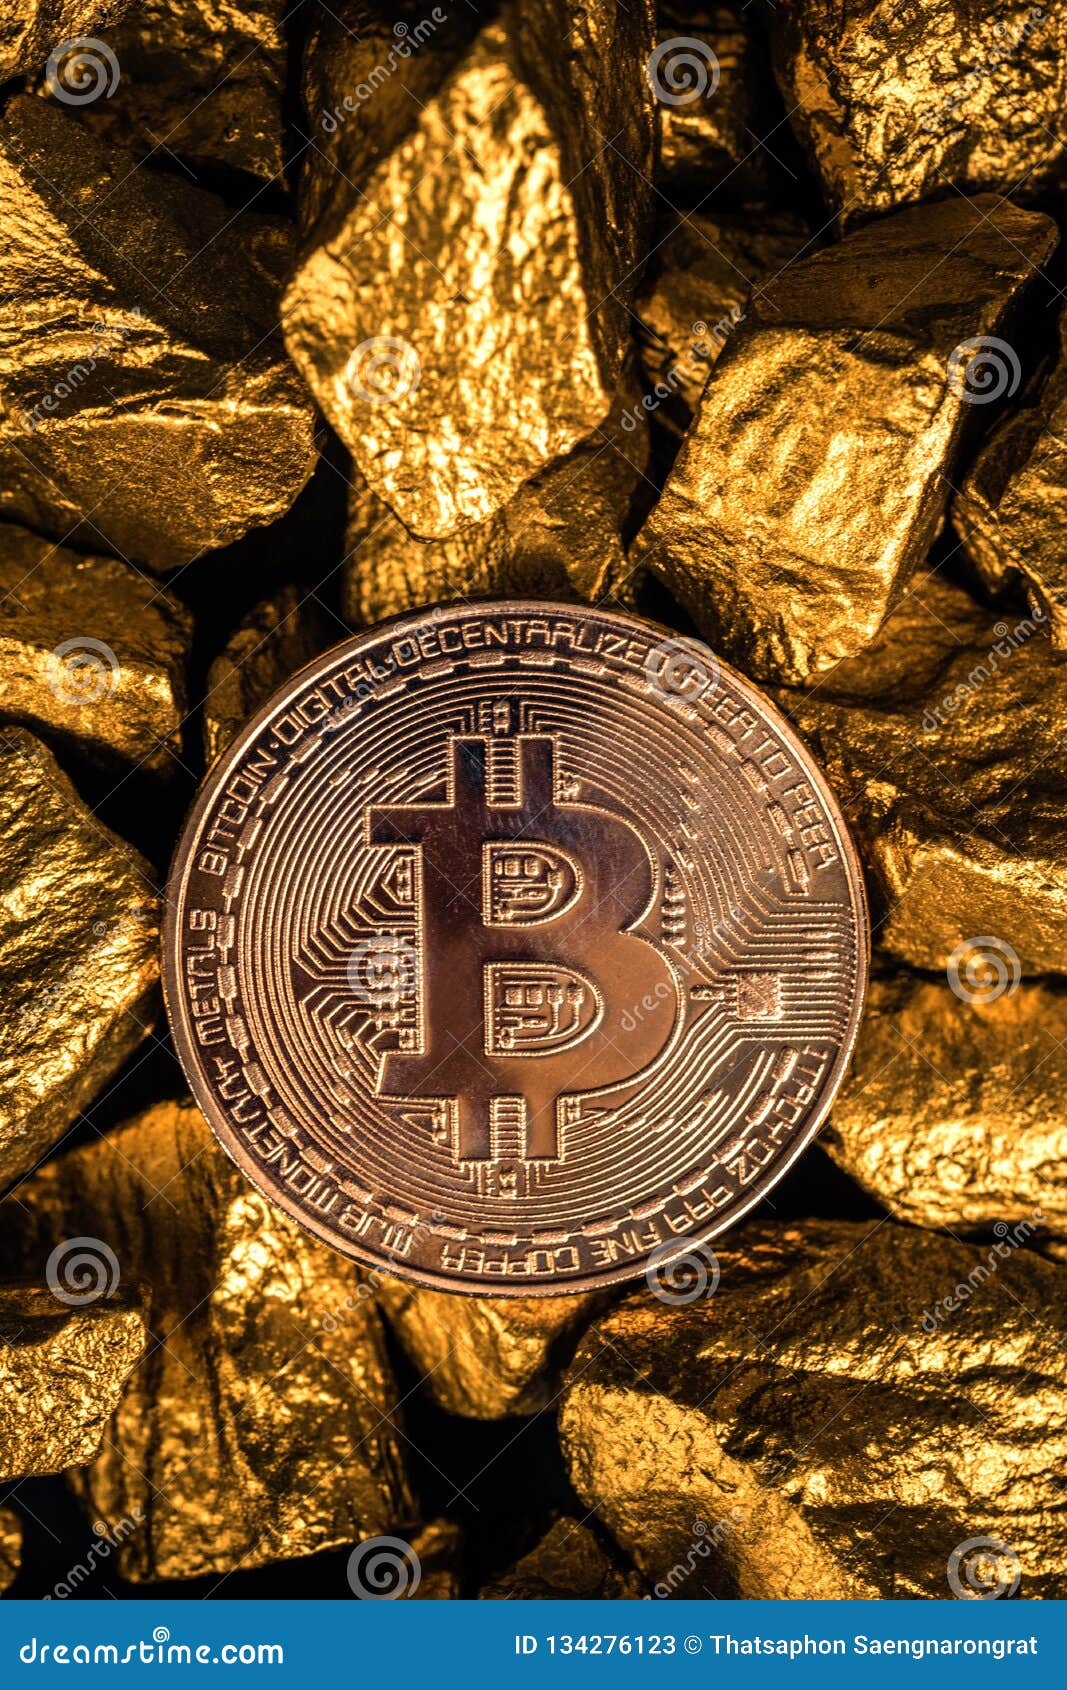 puteți tranzacționa bitcoin pentru bani bitcoin houston